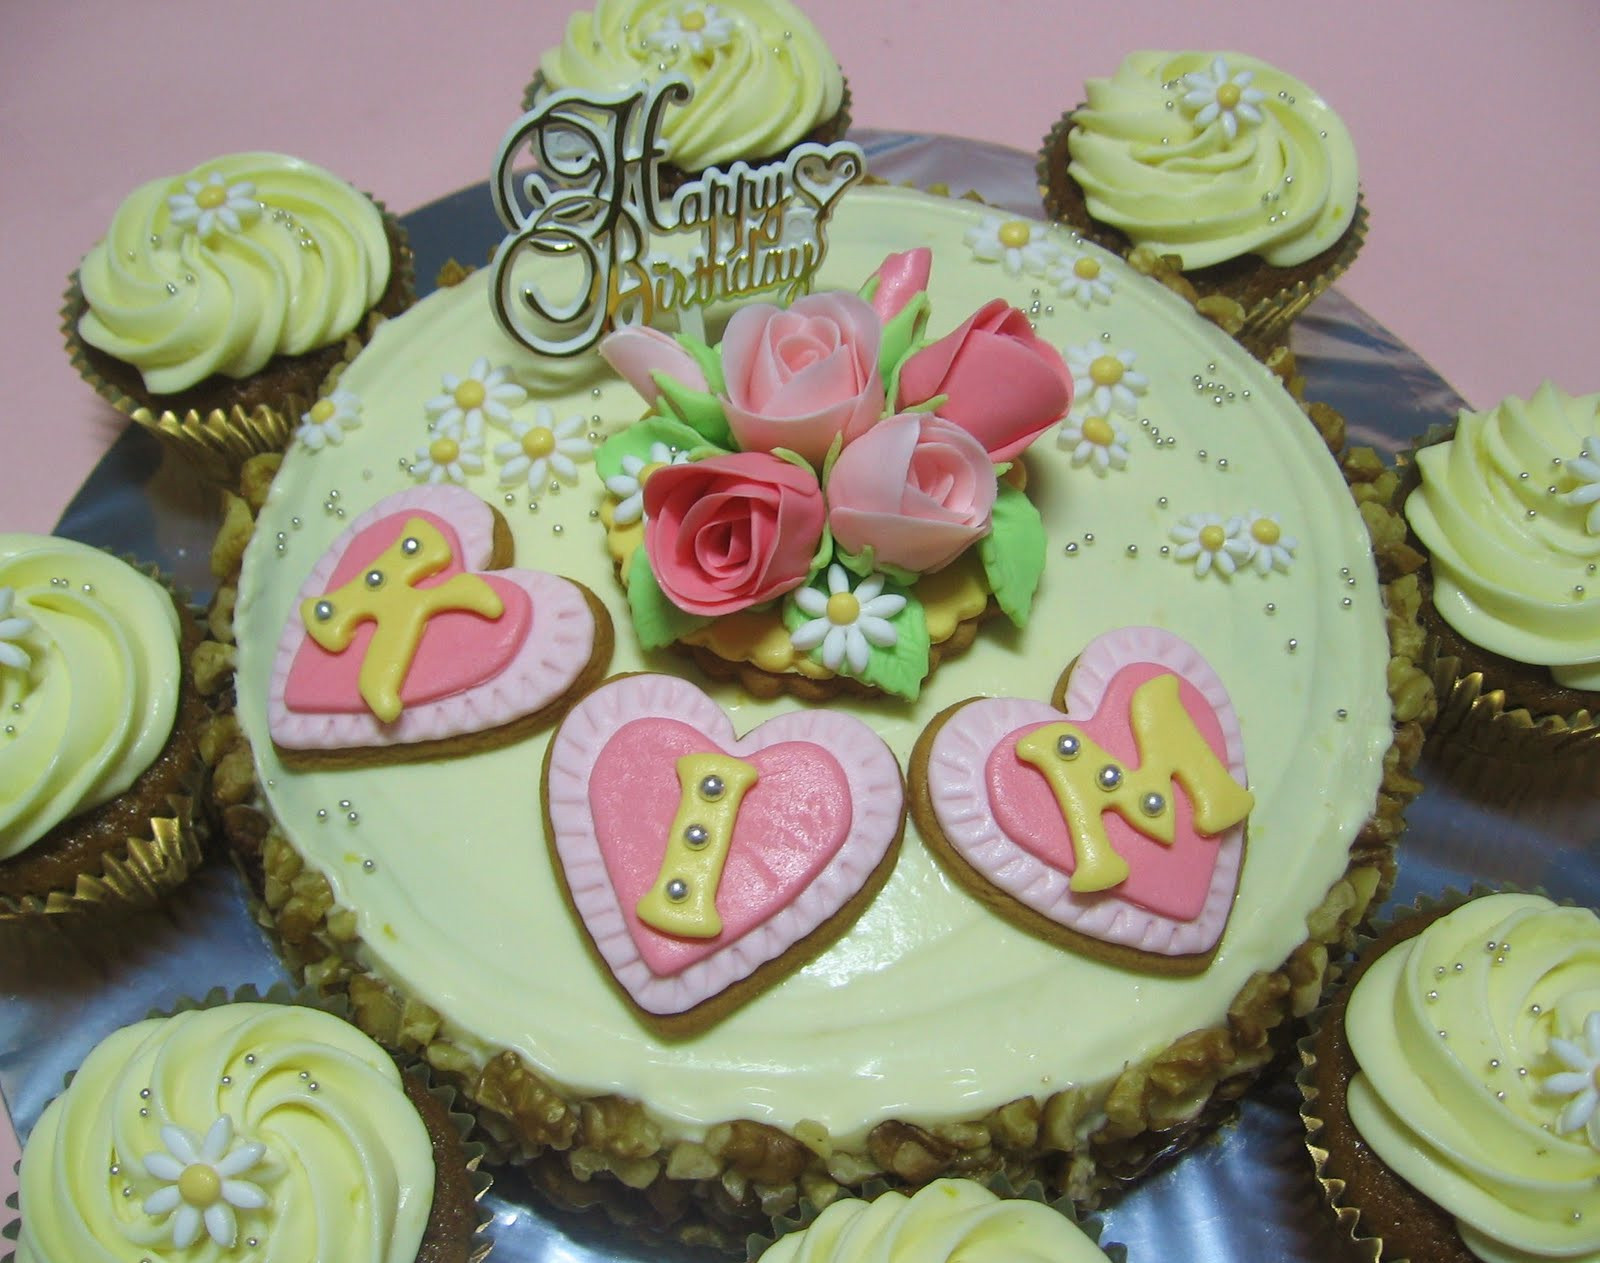 Best ideas about Happy Birthday Kim Cake
. Save or Pin Bee s Cake Happy Birthday Kim Now.